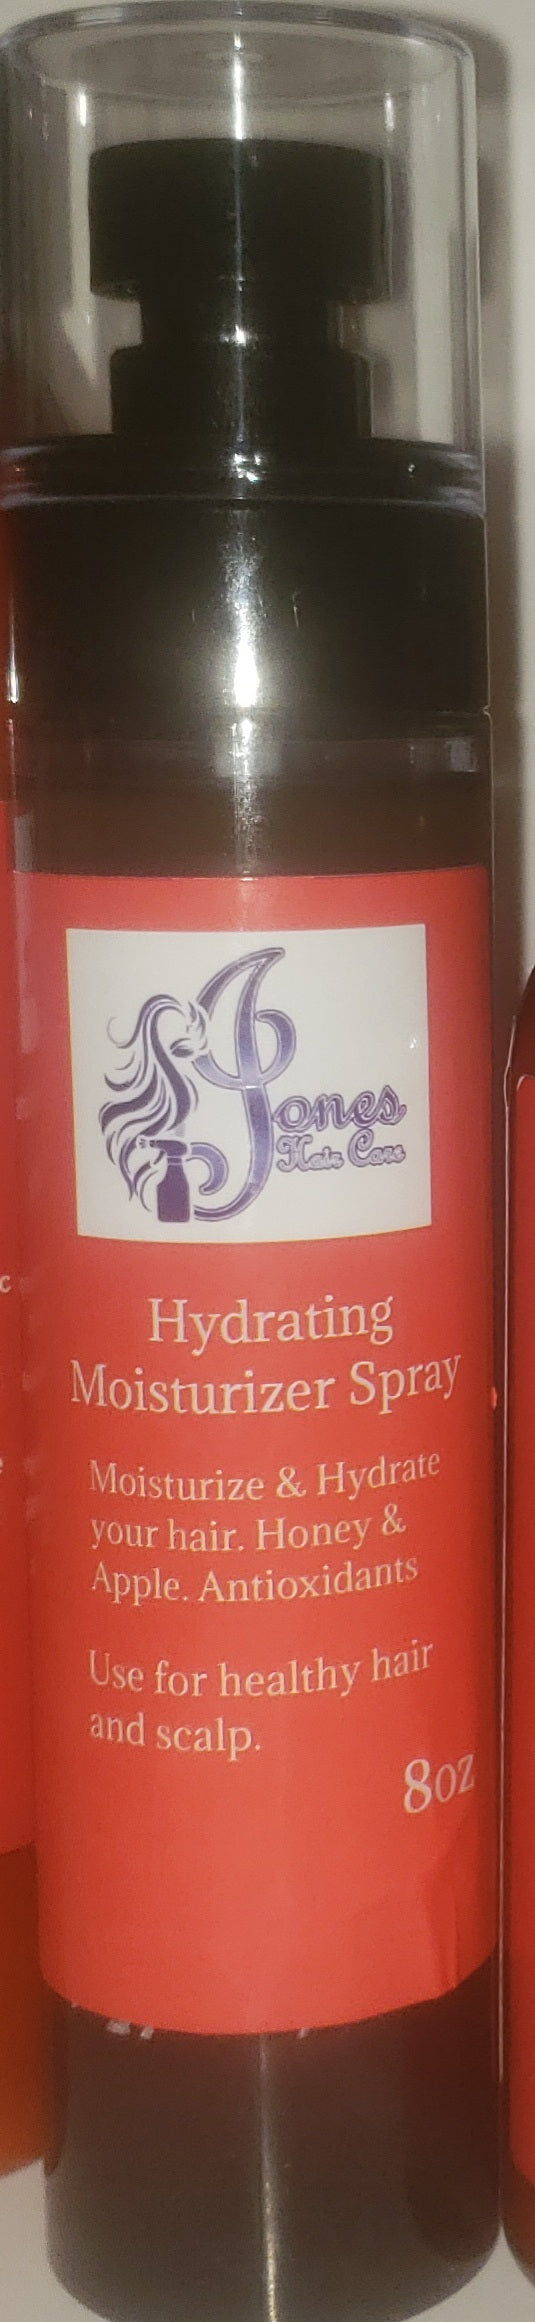 Hydrating Hair Moisturizer Spray